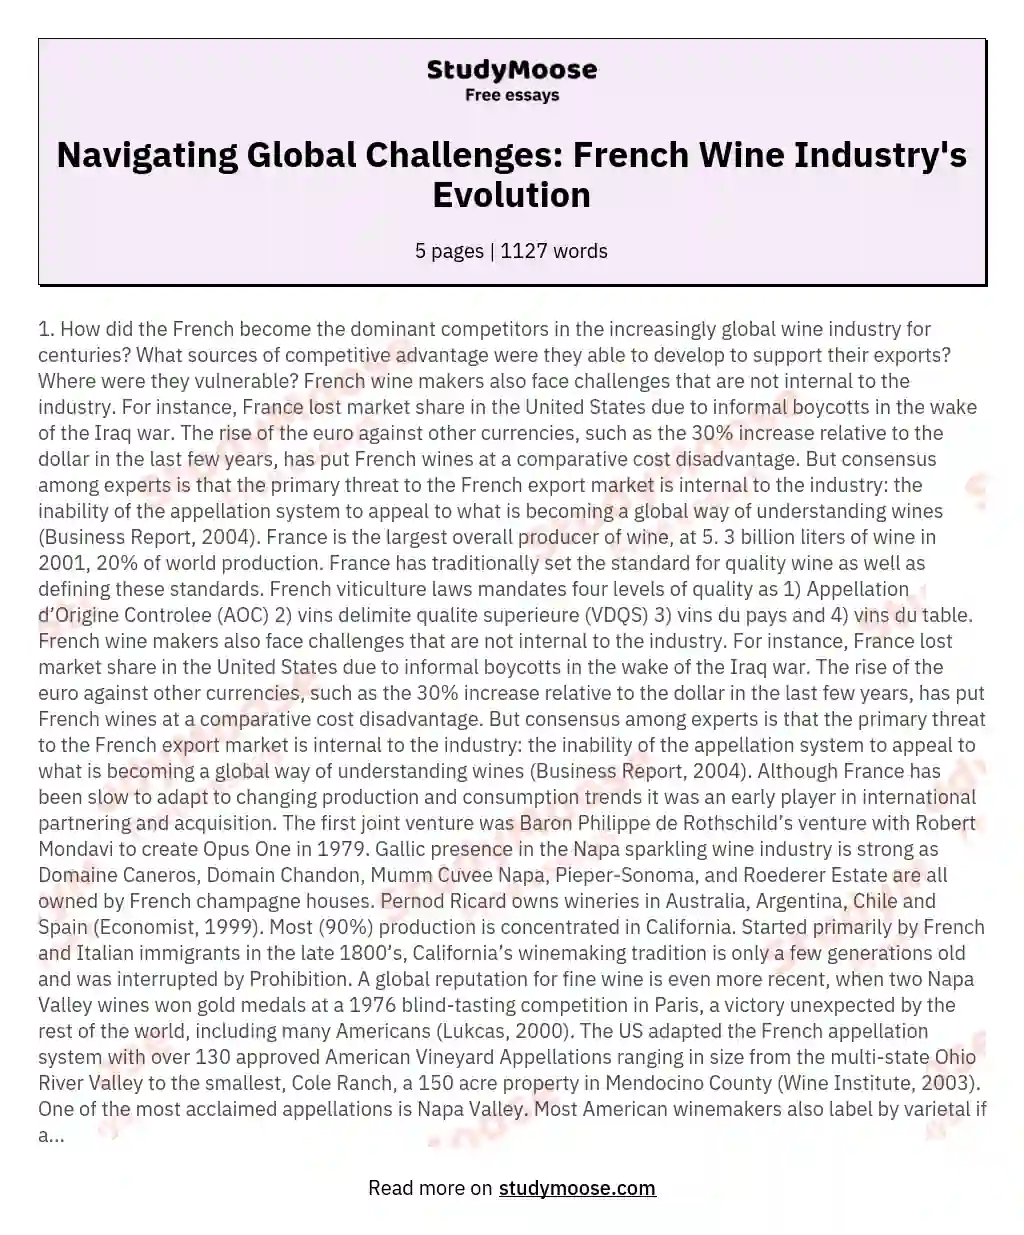 Navigating Global Challenges: French Wine Industry's Evolution essay